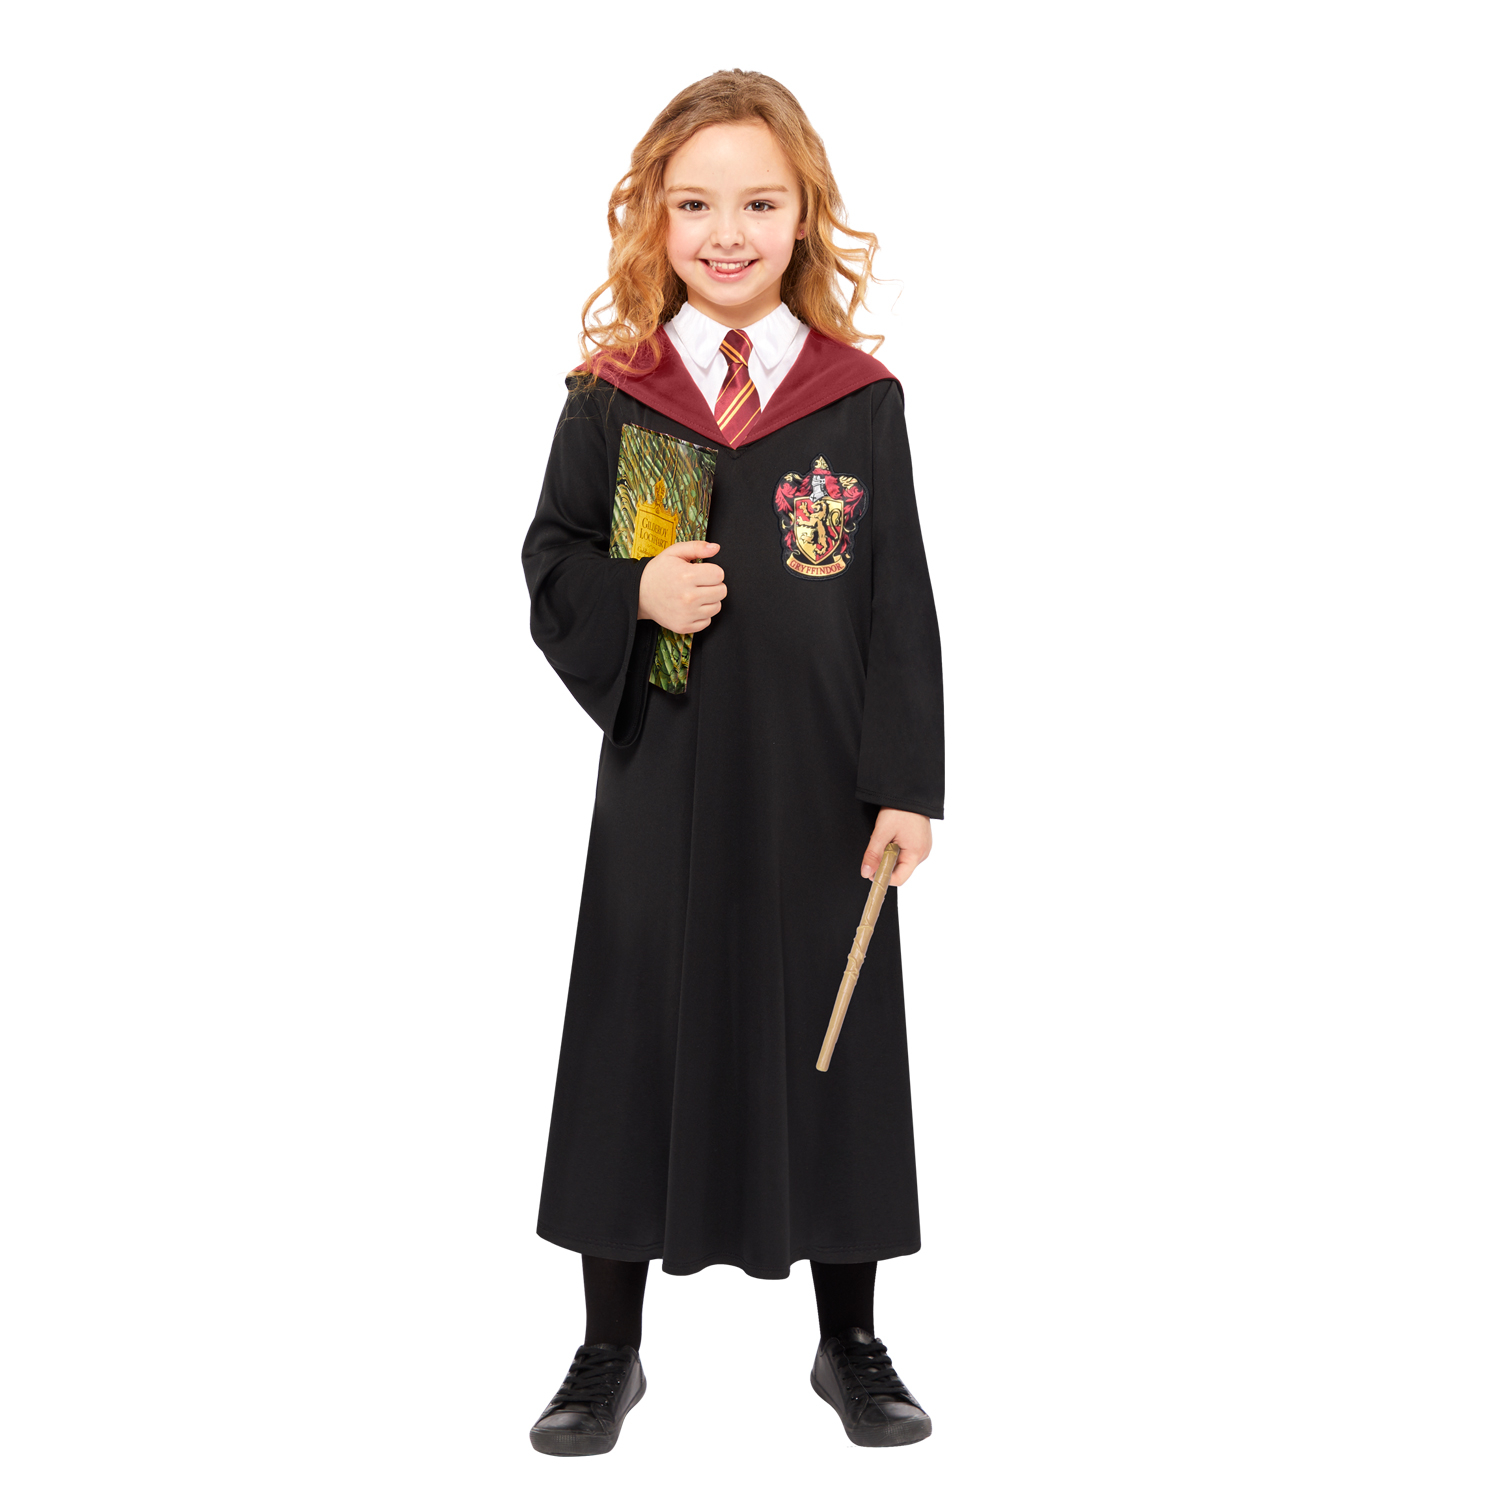 Hermione Robe Kit Costume - Age 6-8 Years - 1 PC : Amscan International